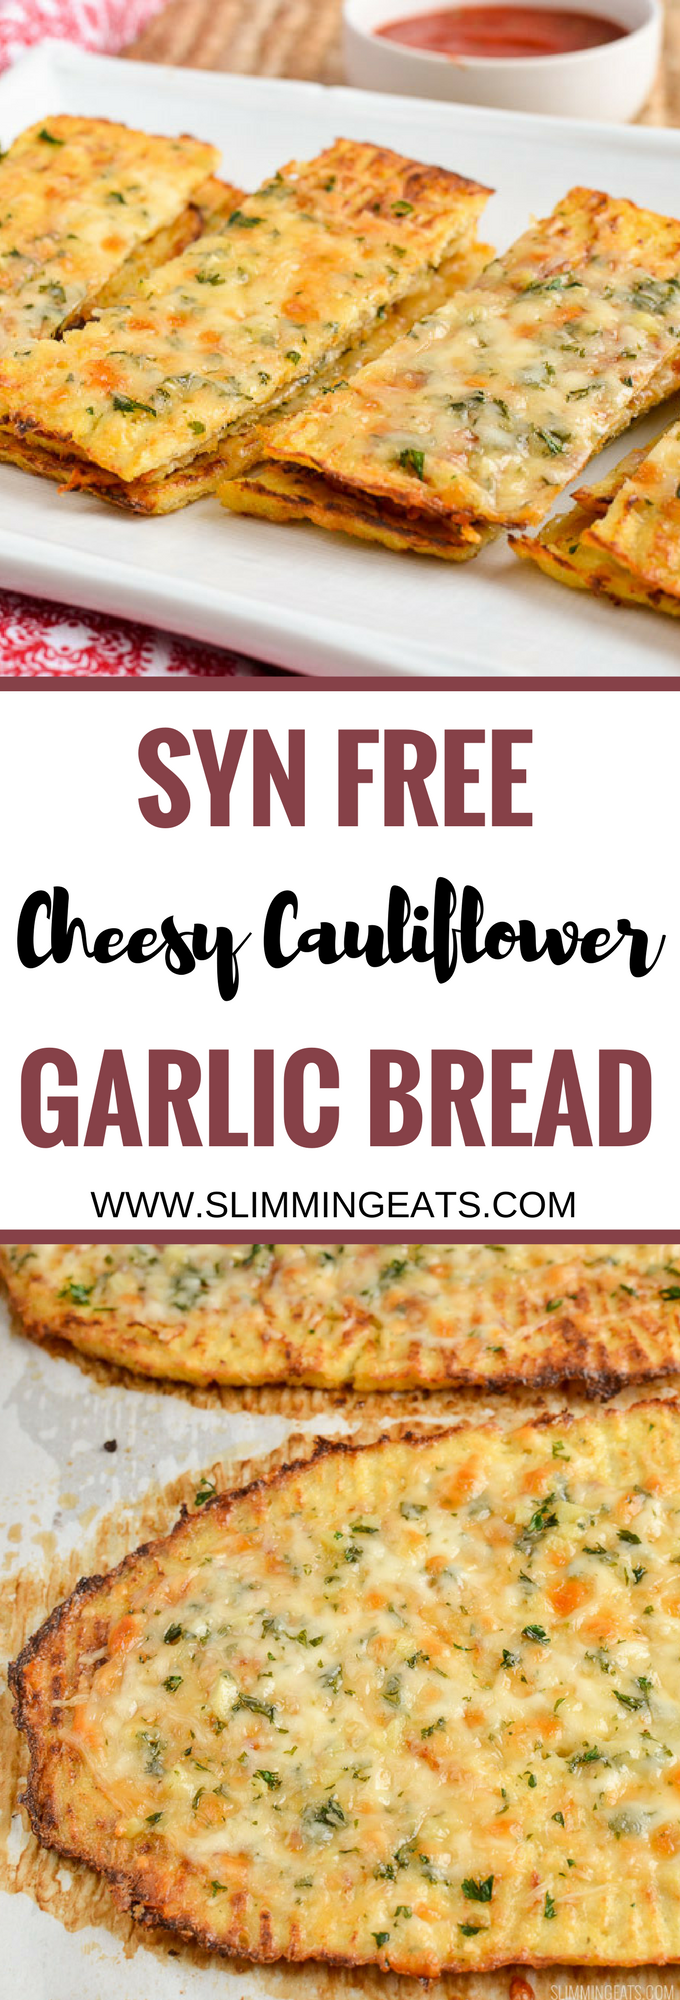 Slimming Eats - Son Free Cheesy Cauliflower Garlic Bread - gluten free, vegetarian, Slimming World and Weight Watchers friendly